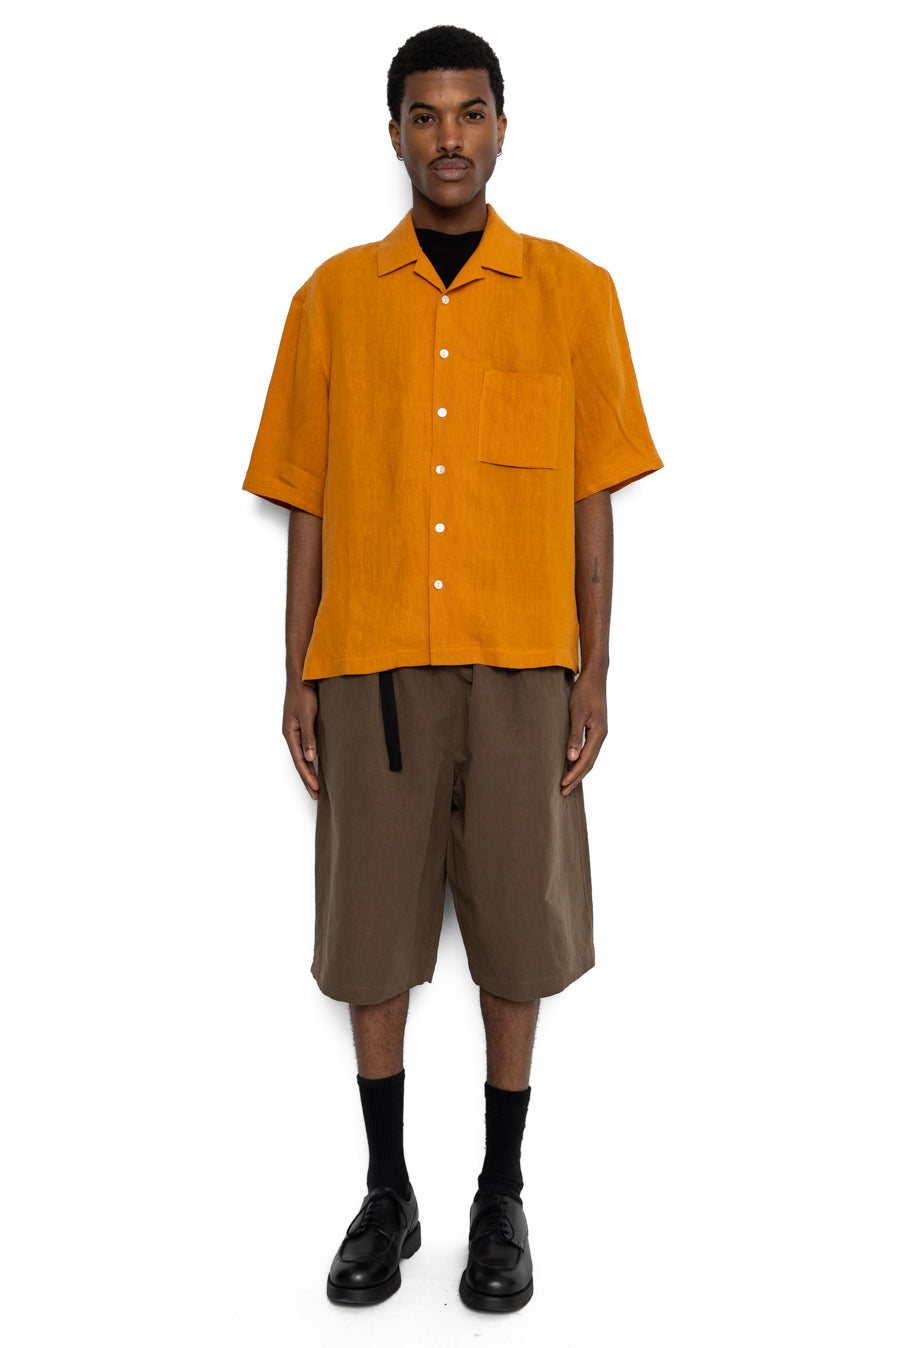 Aloha Shirt - Burnt Orange